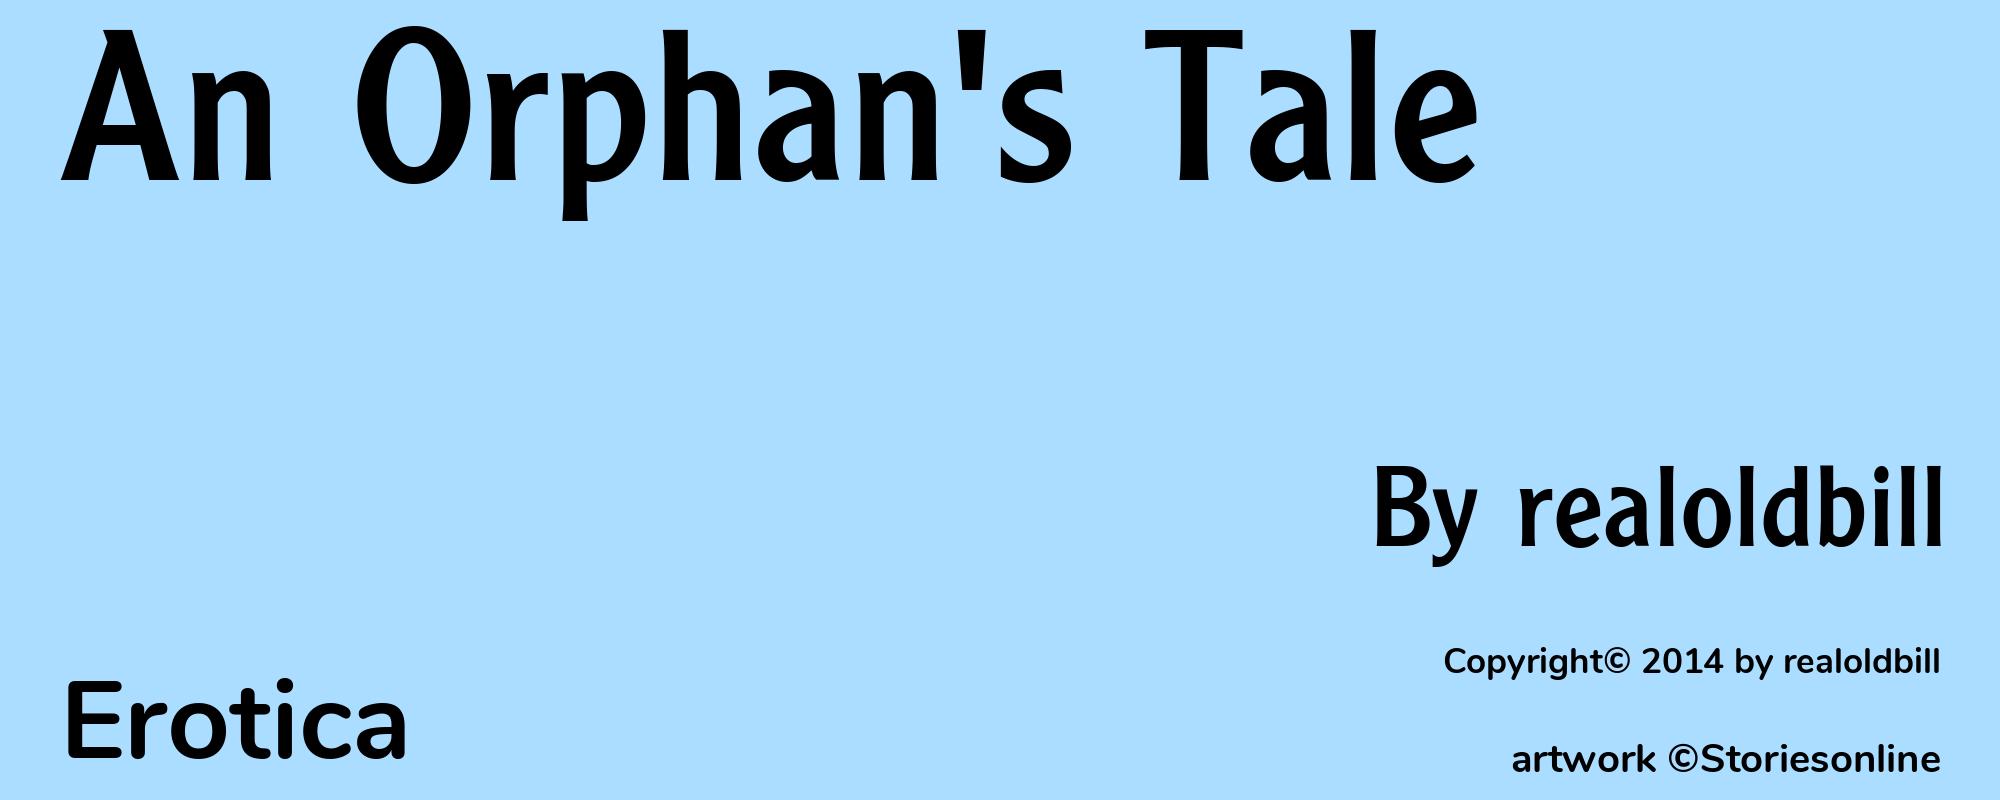 An Orphan's Tale - Cover